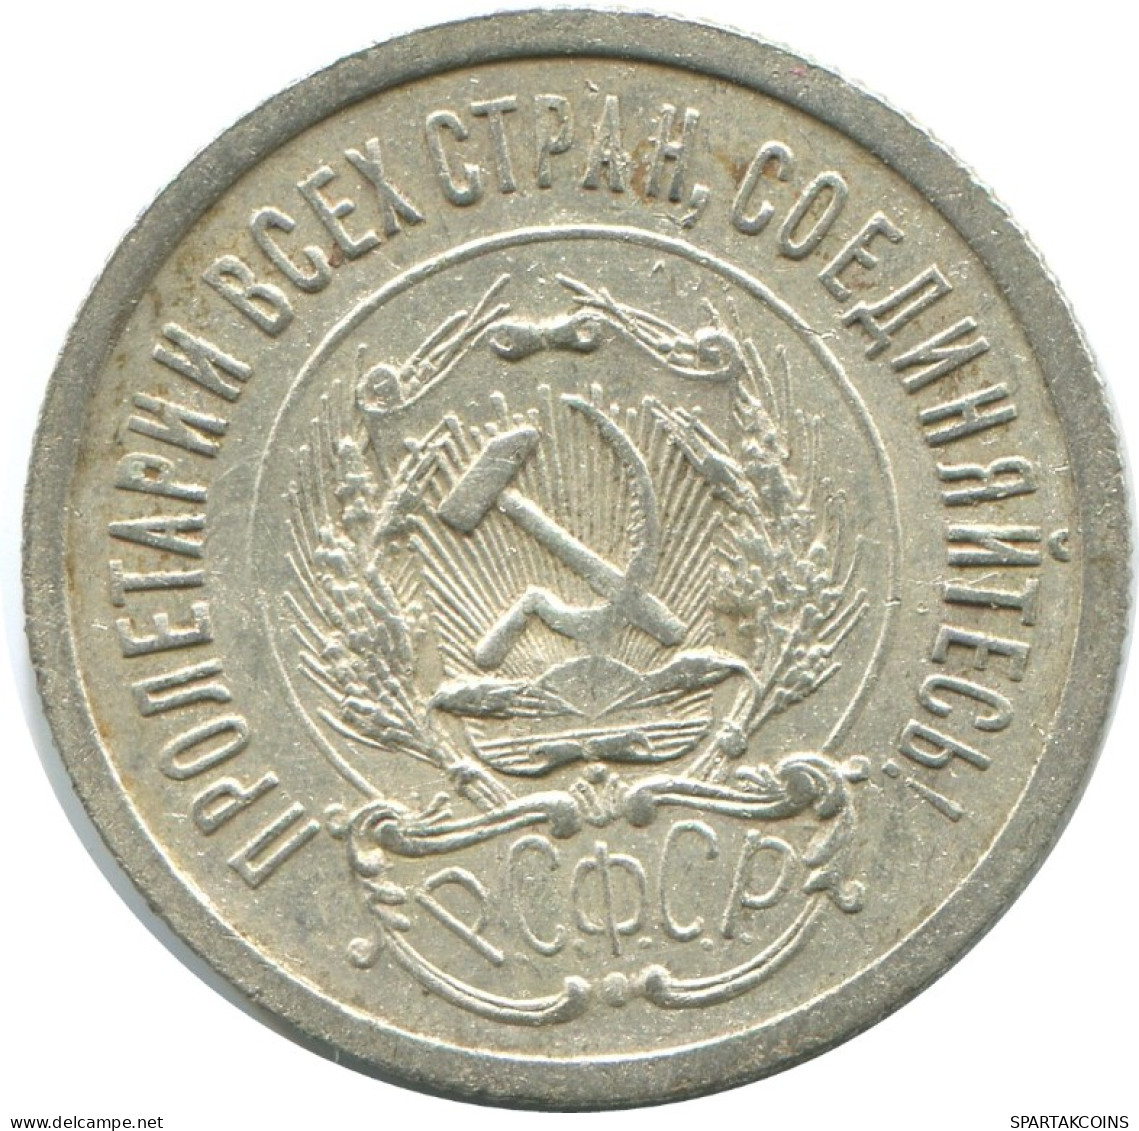 20 KOPEKS 1923 RUSSIA RSFSR SILVER Coin HIGH GRADE #AF437.4.U.A - Russia